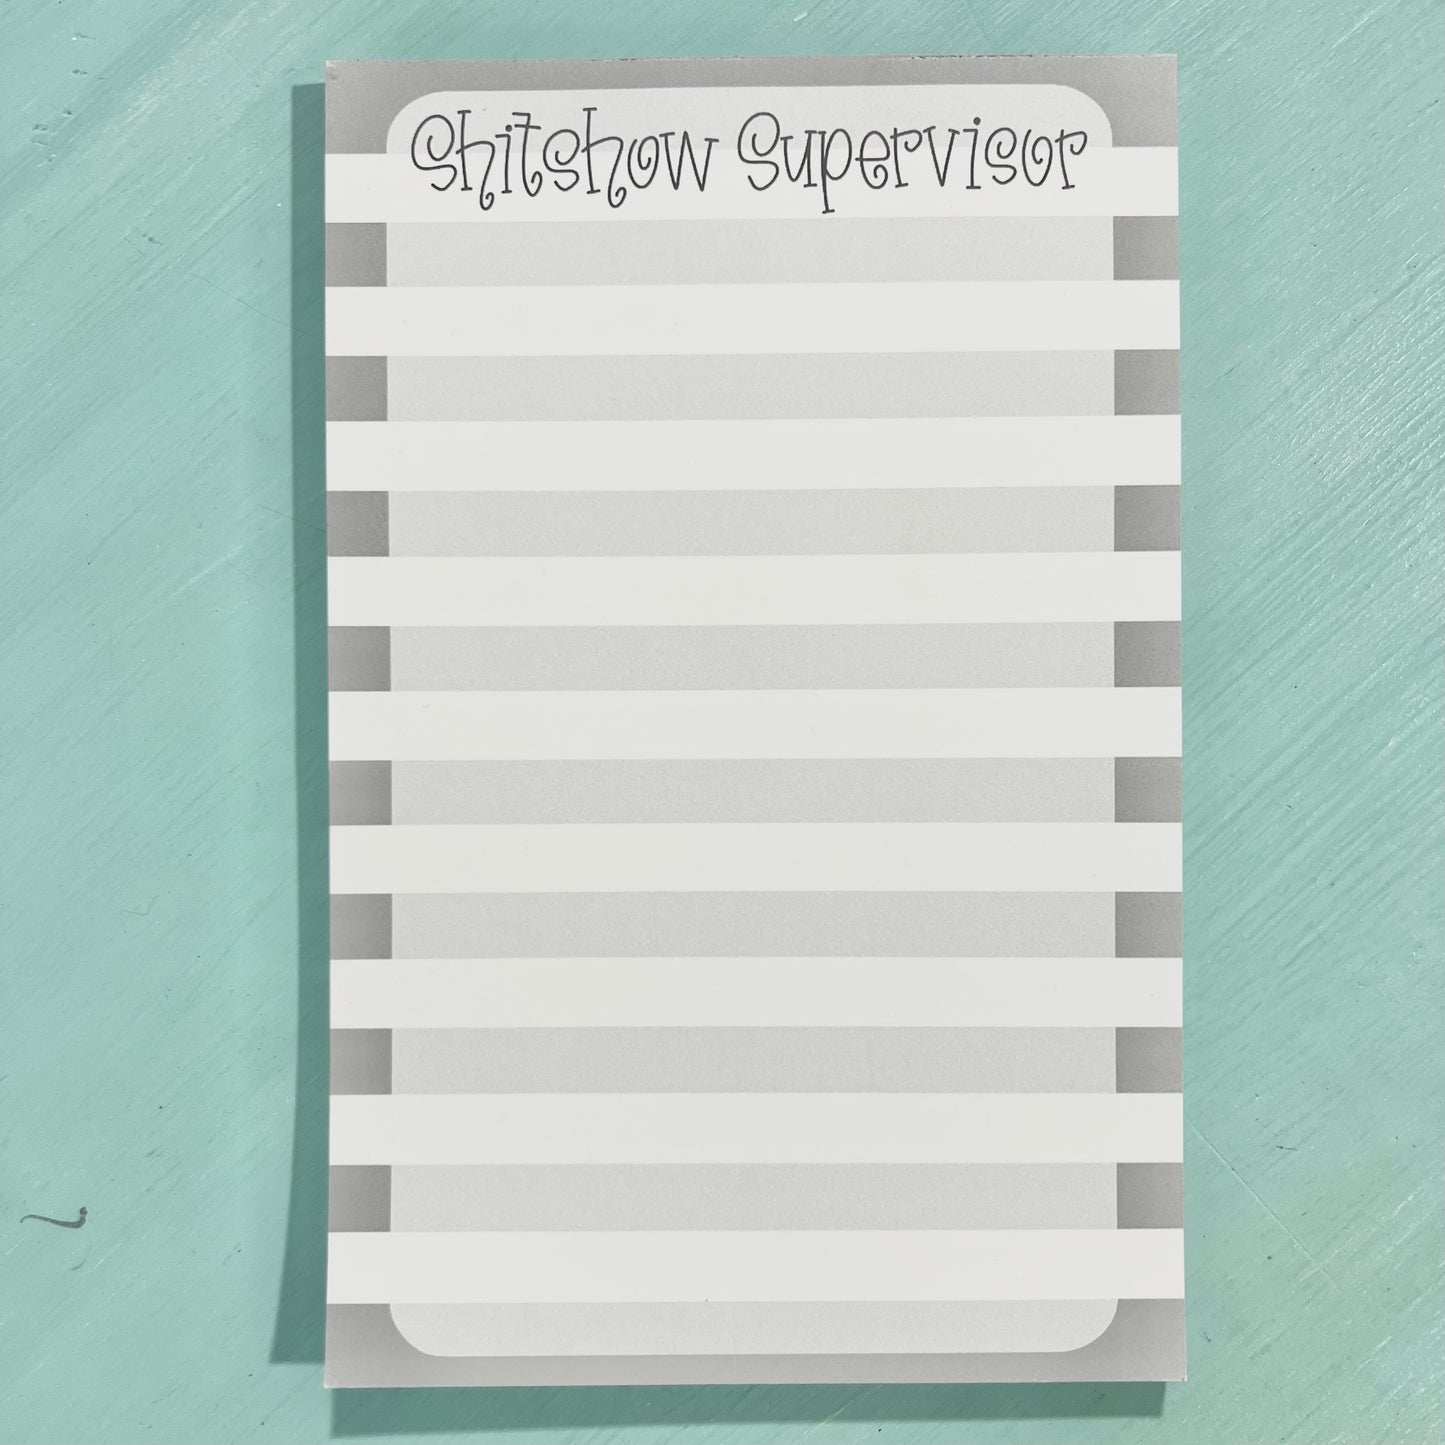 Sh*tshow Supervisor — Notepad